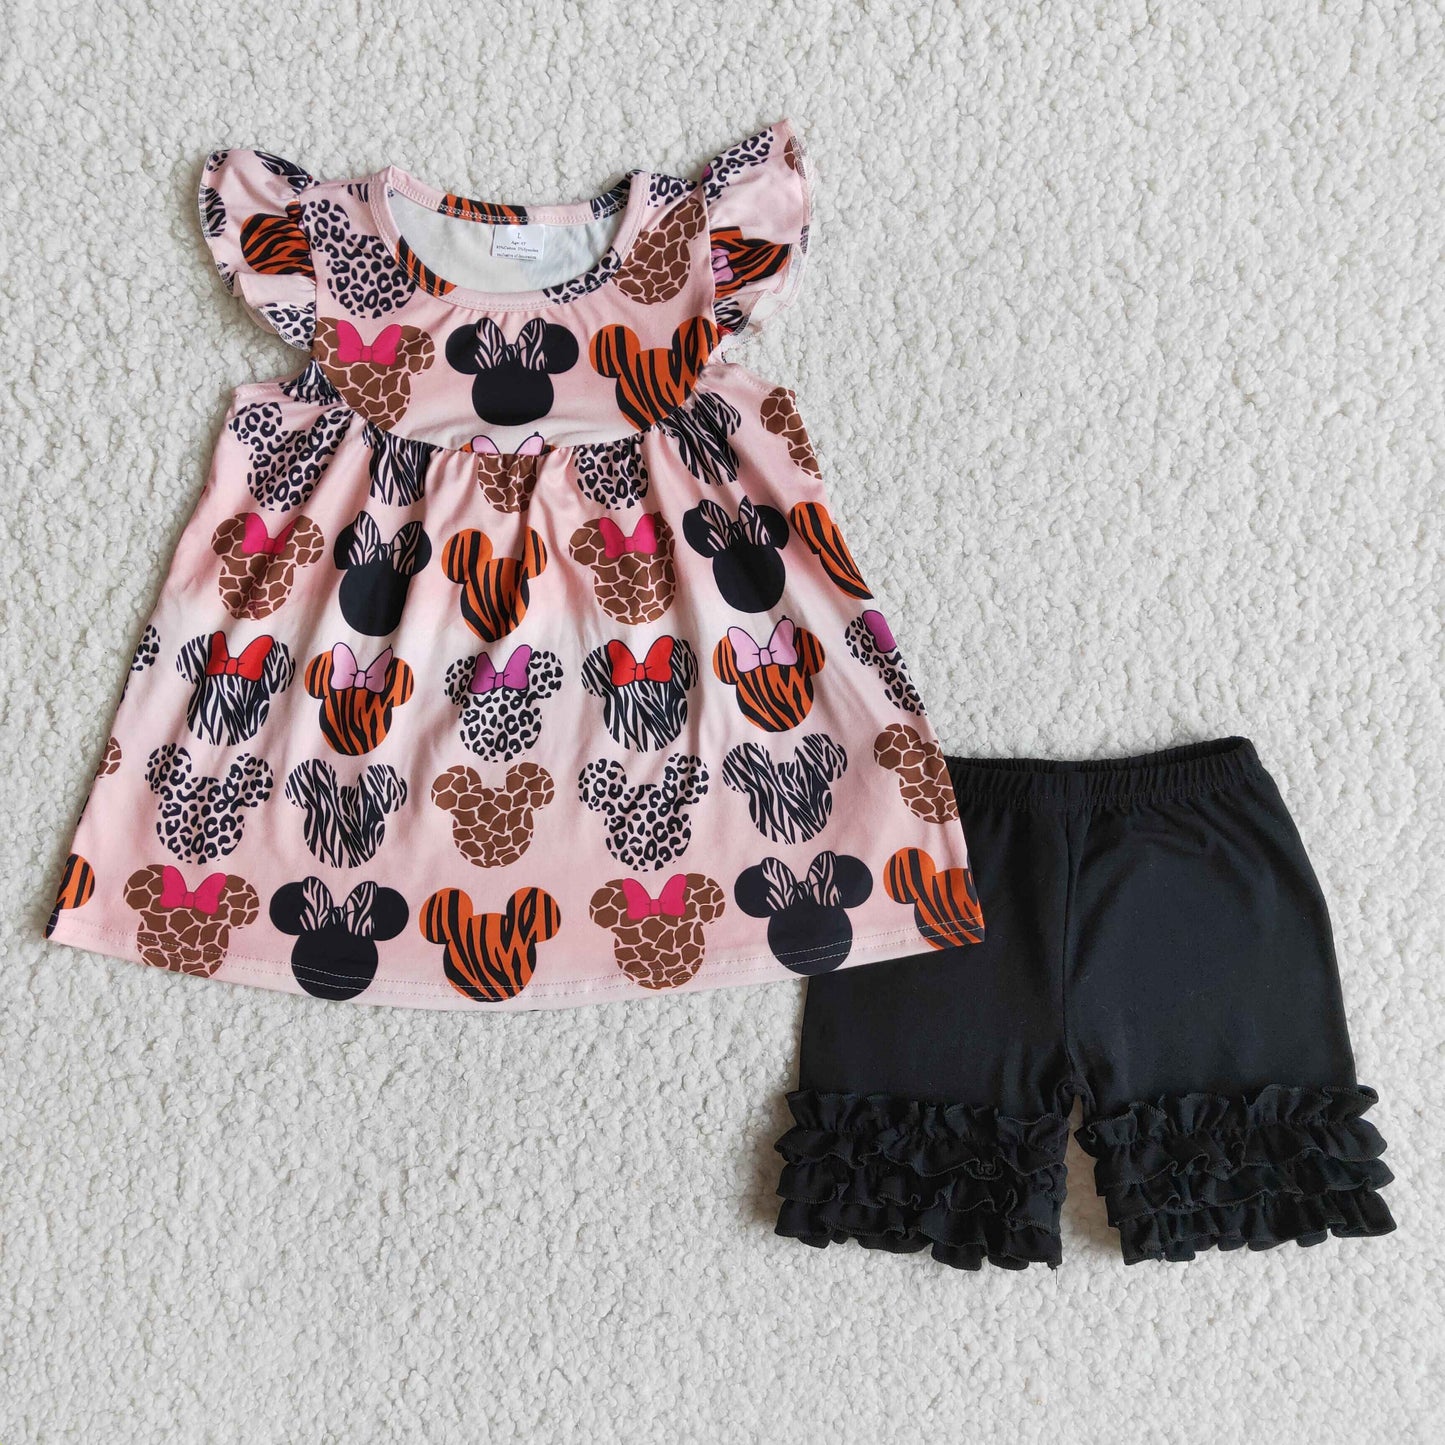 baby girls cartoon top black ruffle shorts 2pcs summer outfit